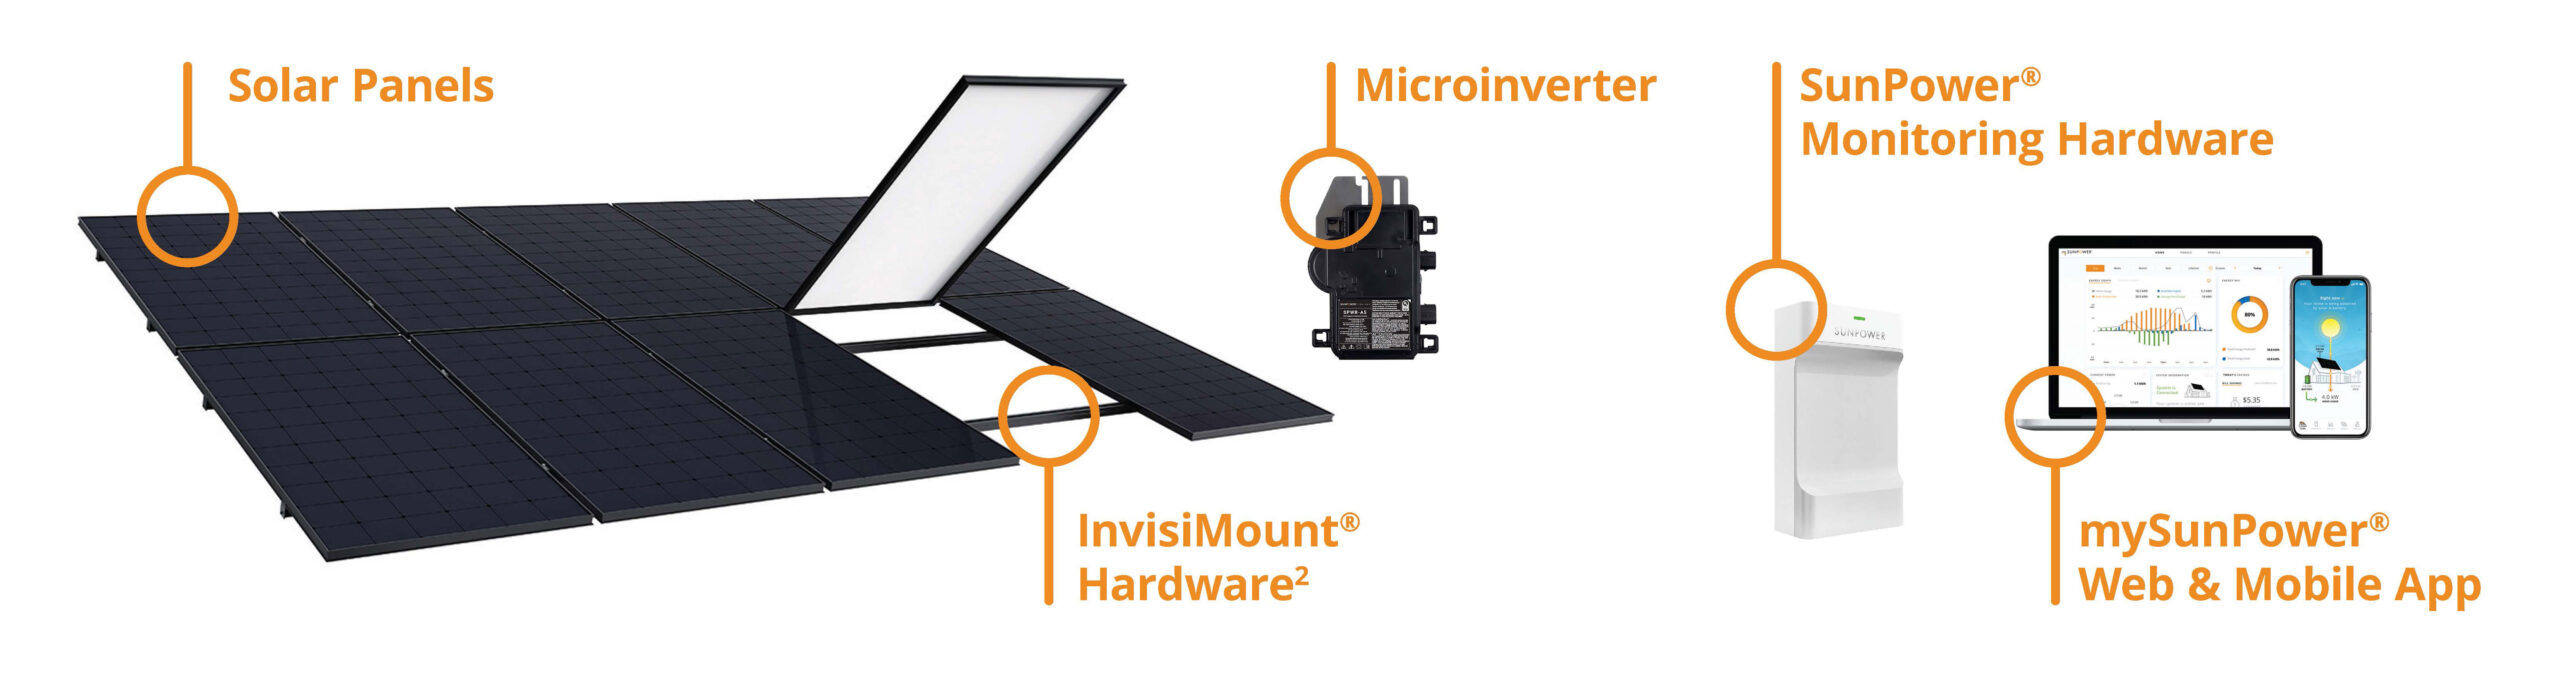 SunPower Solar System Components Paired With Storage InvisiMount Hardware Microinverter Sunpower Monitoring Hardware mySunpower web & mobile app